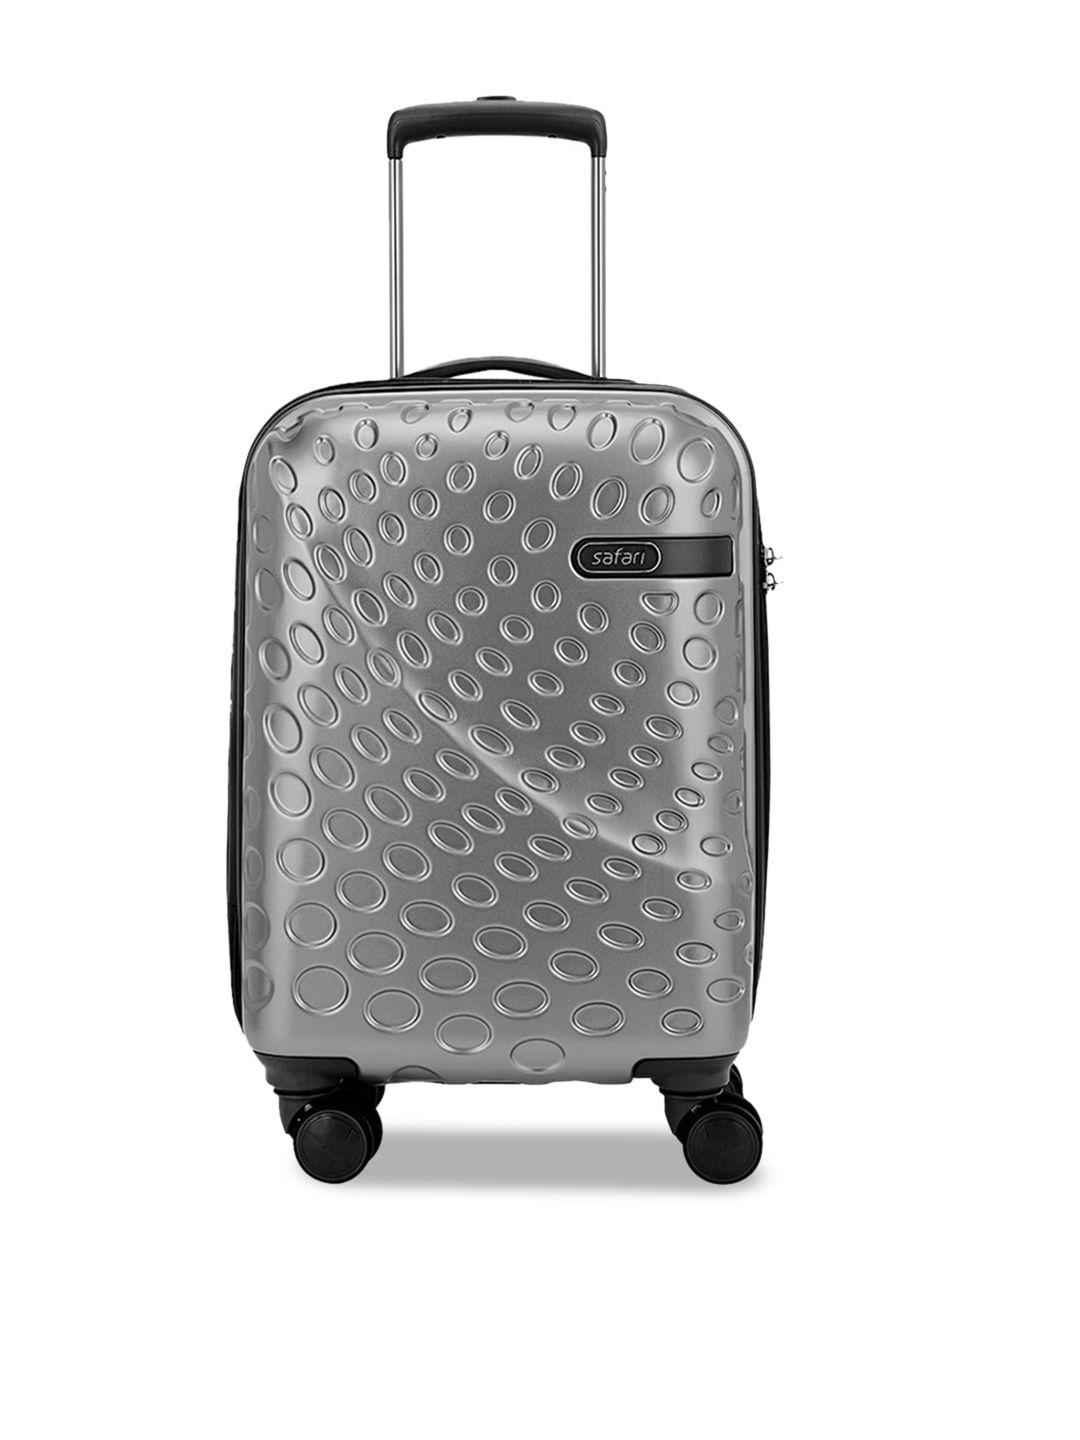 safari orbit textured hard-sided cabin trolley suitcase